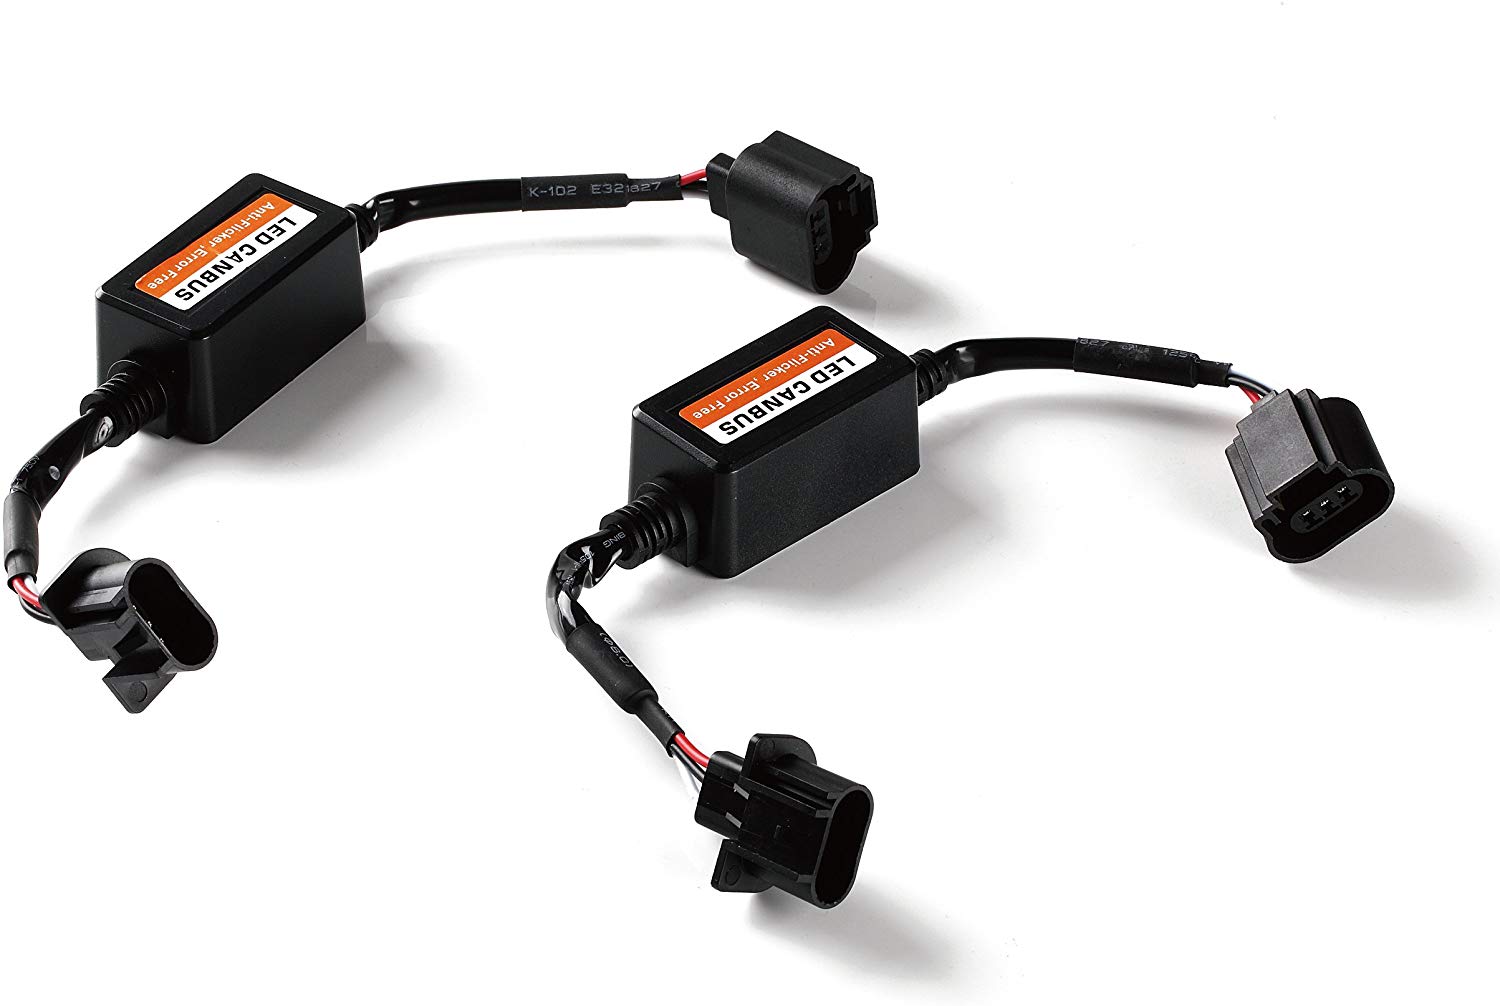 Xprite H13 9008 LED Headlight Jeep JK Anti Flicker Harness, Canbus Adapter Wiring Kits, Warning Error Free Resistor Canceler Decoder (Pair)